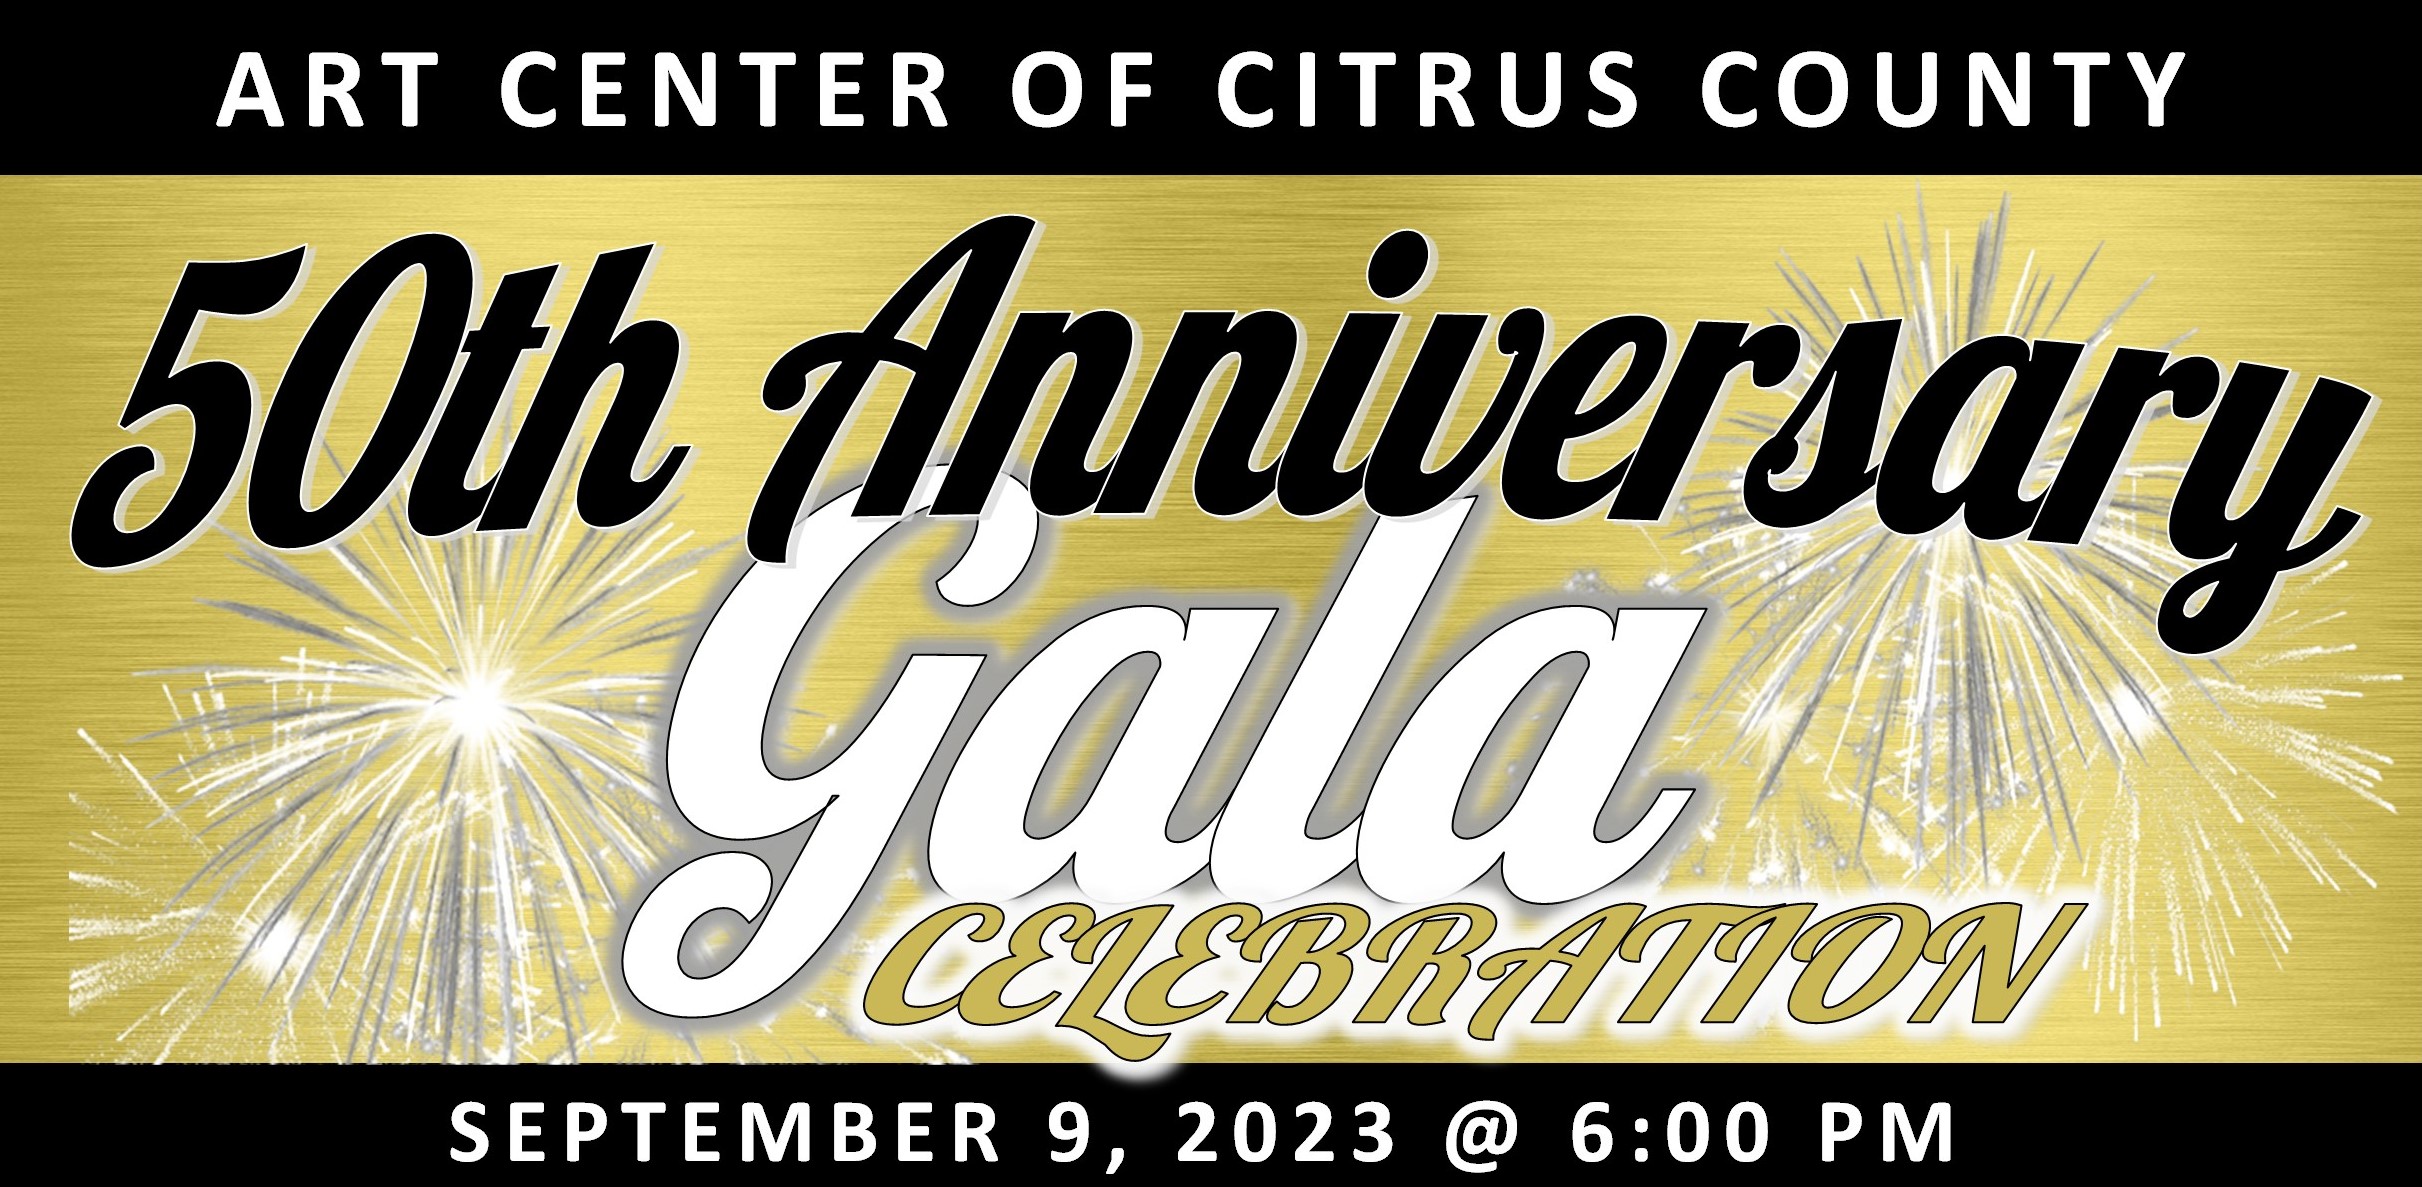 Art Center 50th Anniversary Gala Celebration